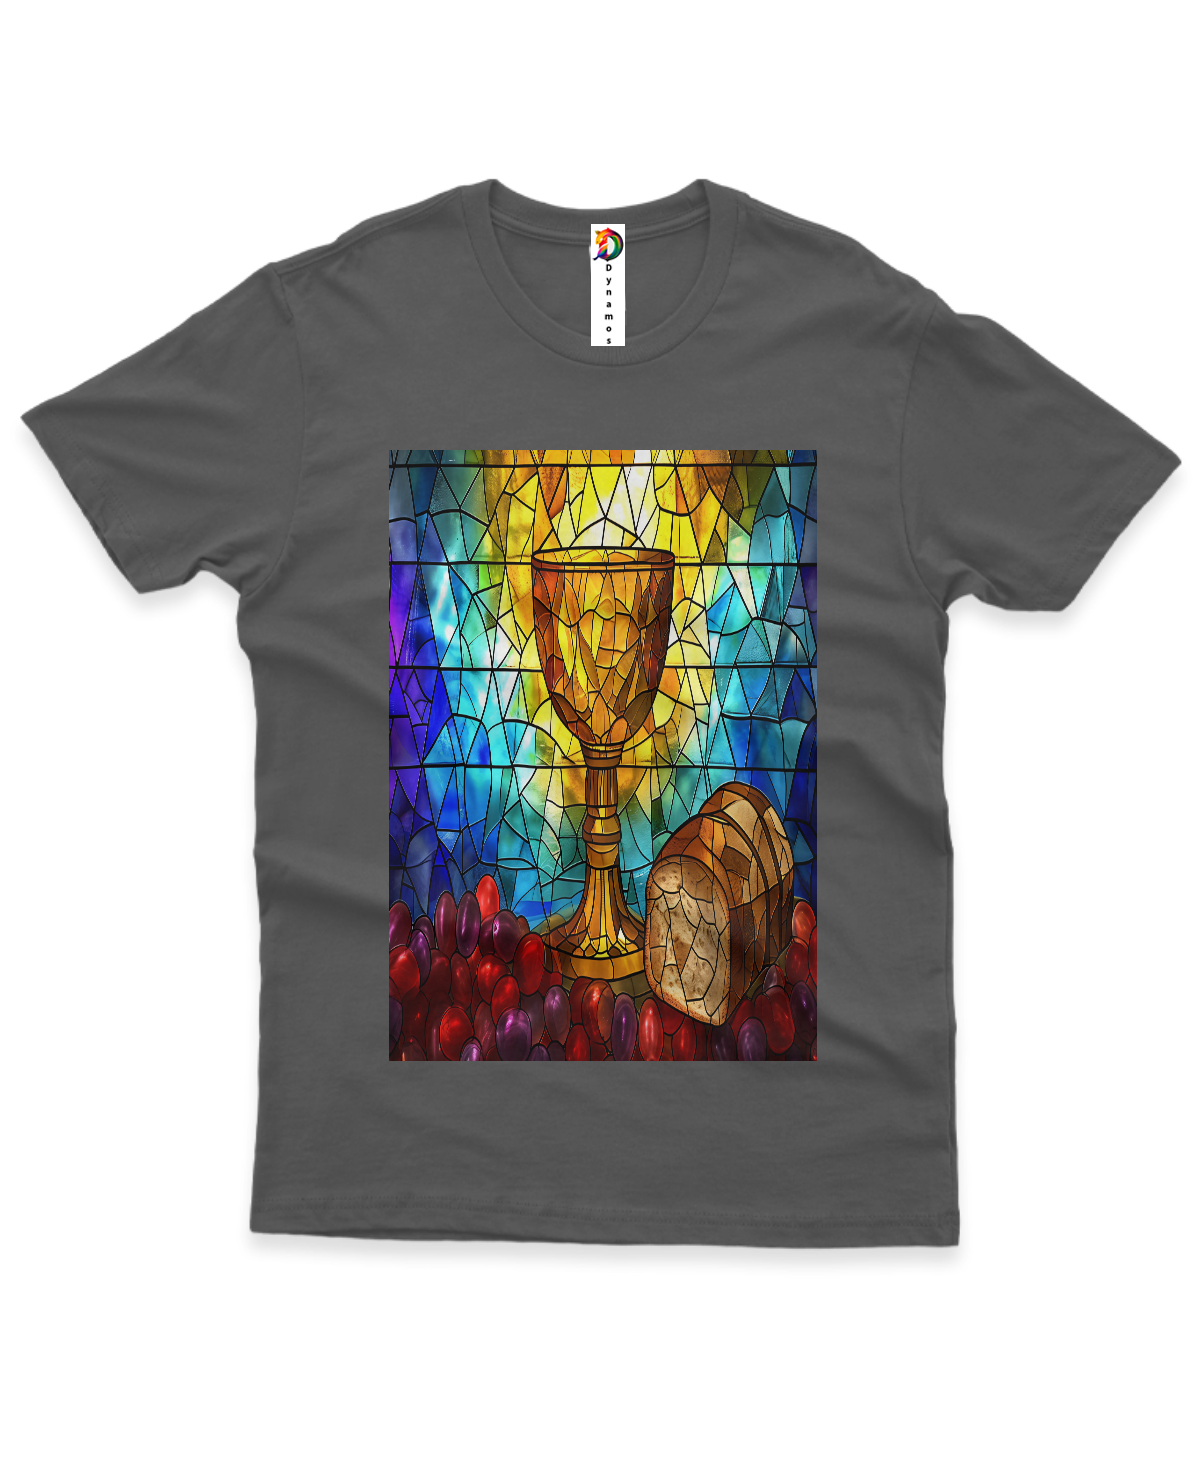 Camiseta Eliomar Masc - Santo Graal - Algodão Pima